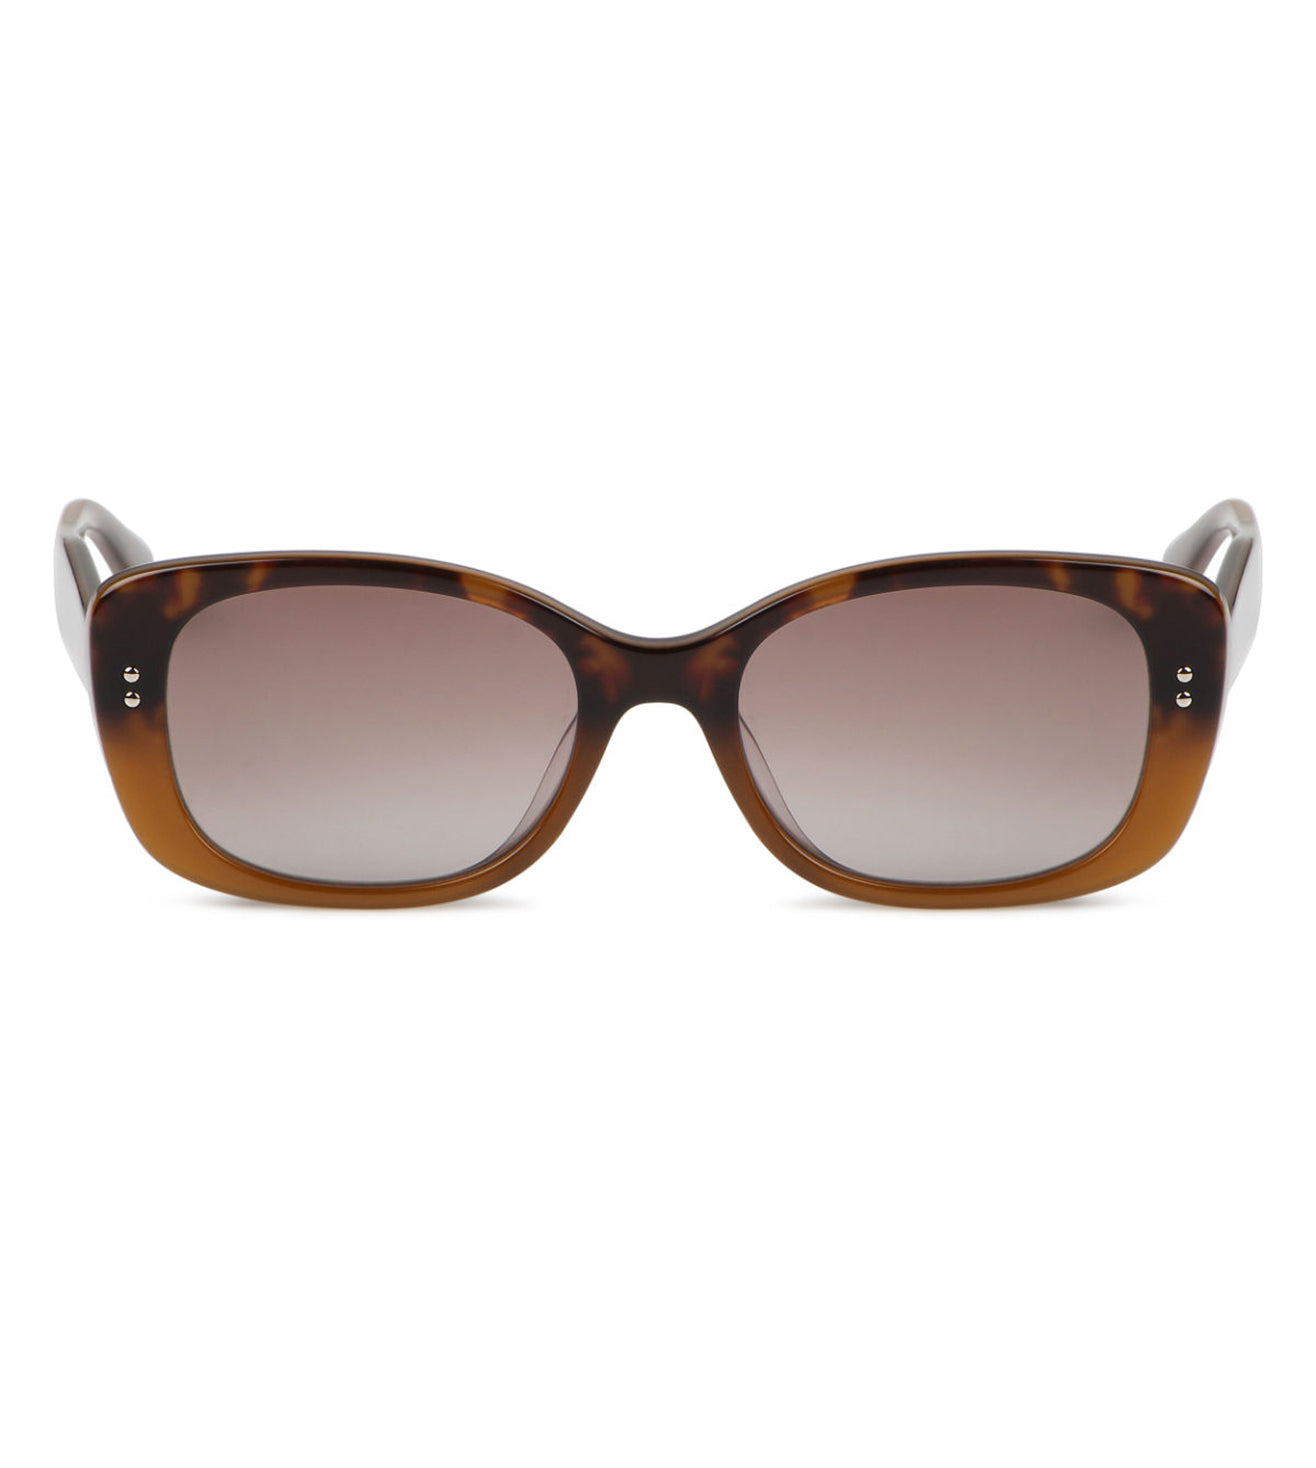 Kate Spade Women's Brown Rectangular Sunglasses